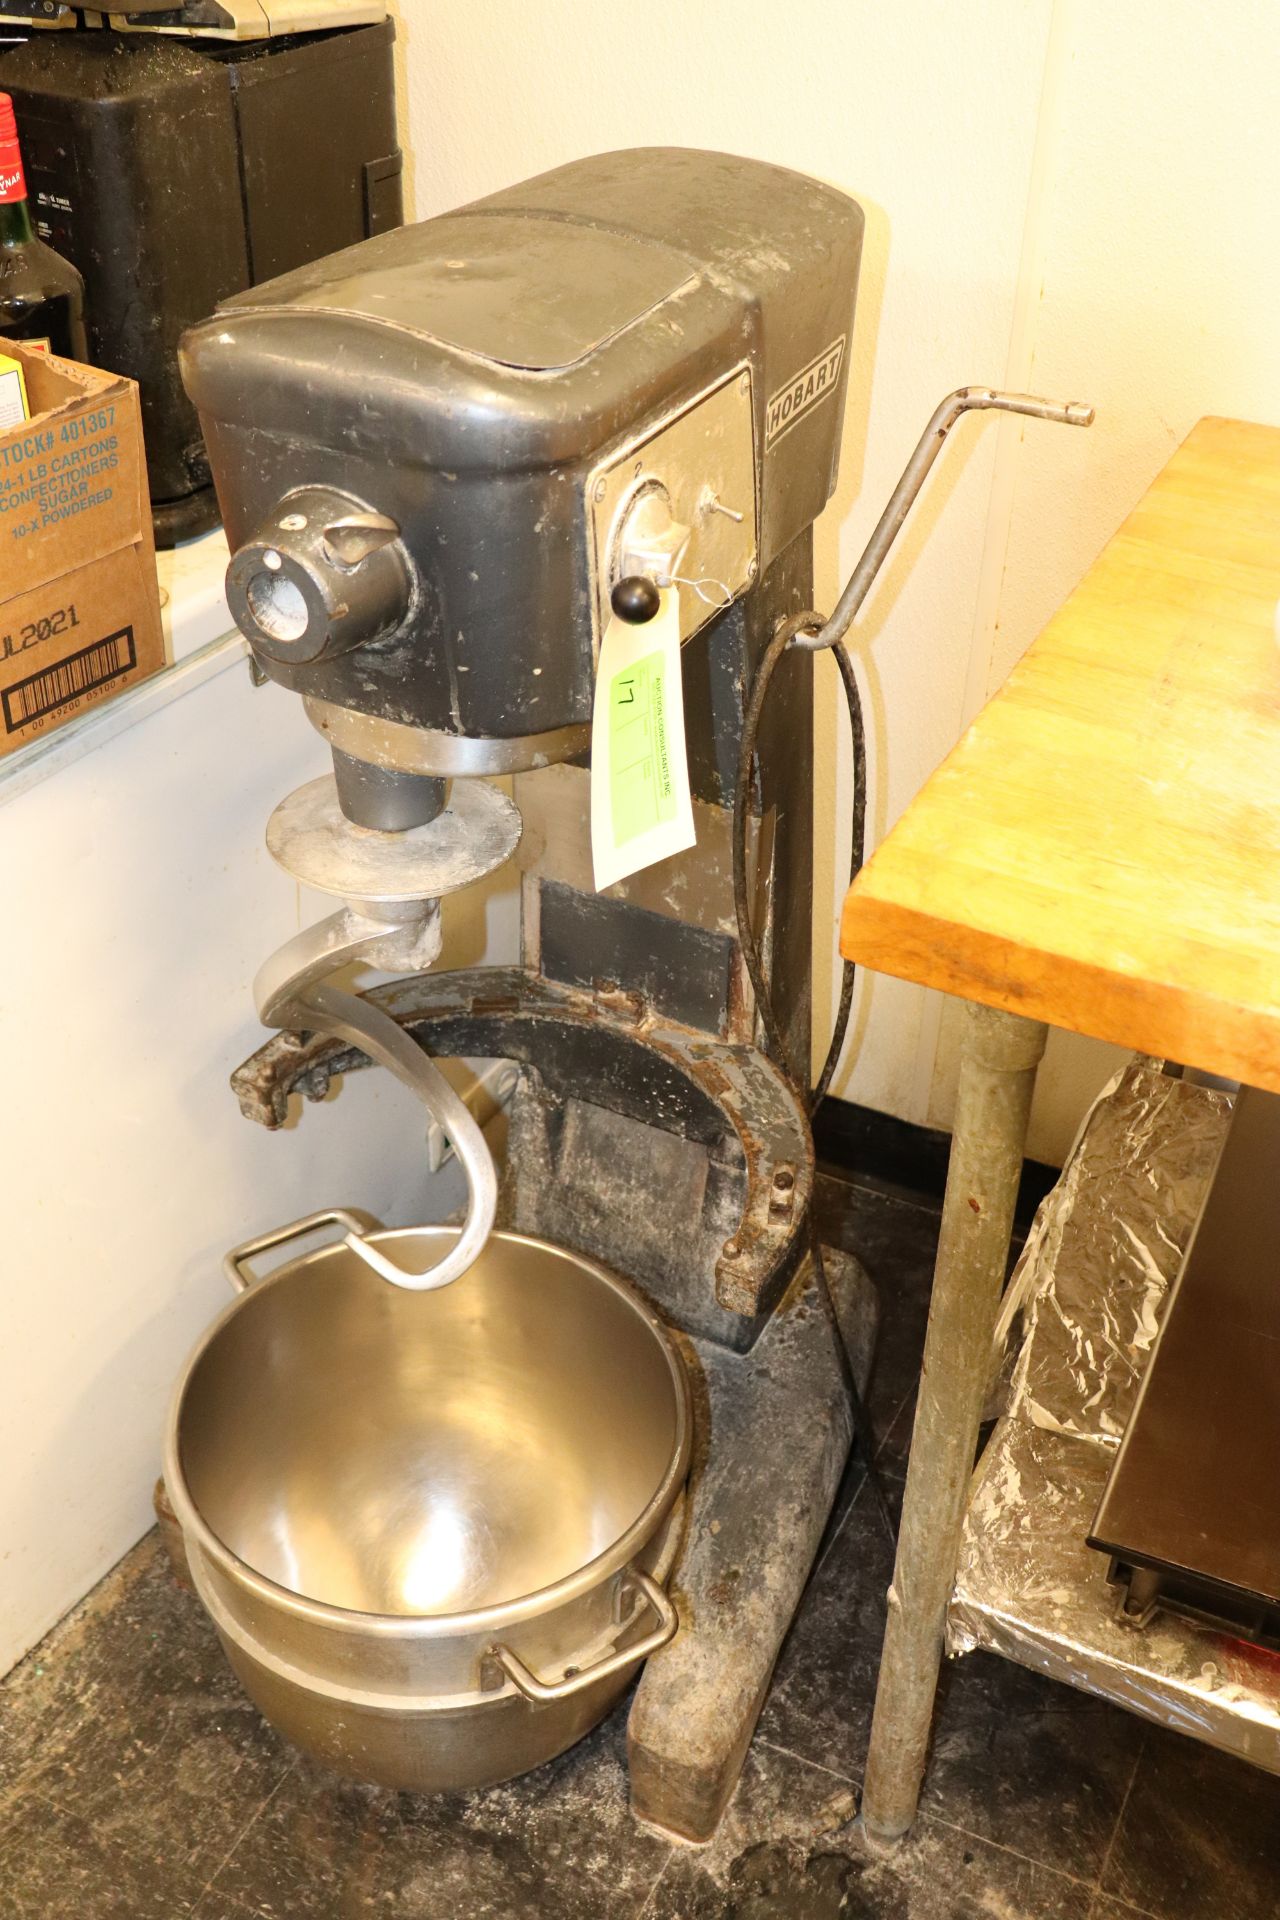 Hobart 40-quart mixer with dough hook and bowl